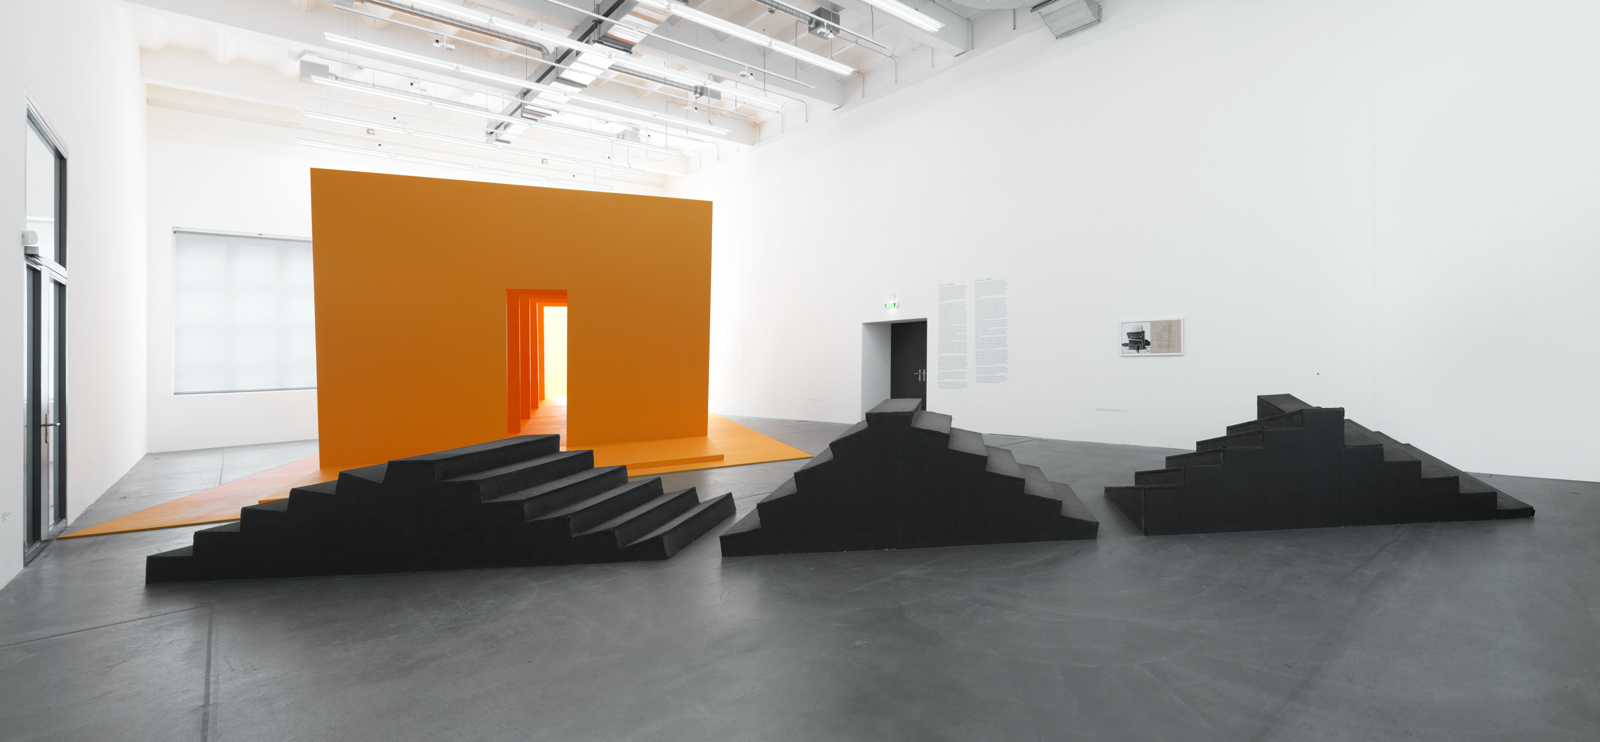 Gianni Colombo / "Ambienti", exhibition view, Haus Konstruktiv, Zürich / 2009